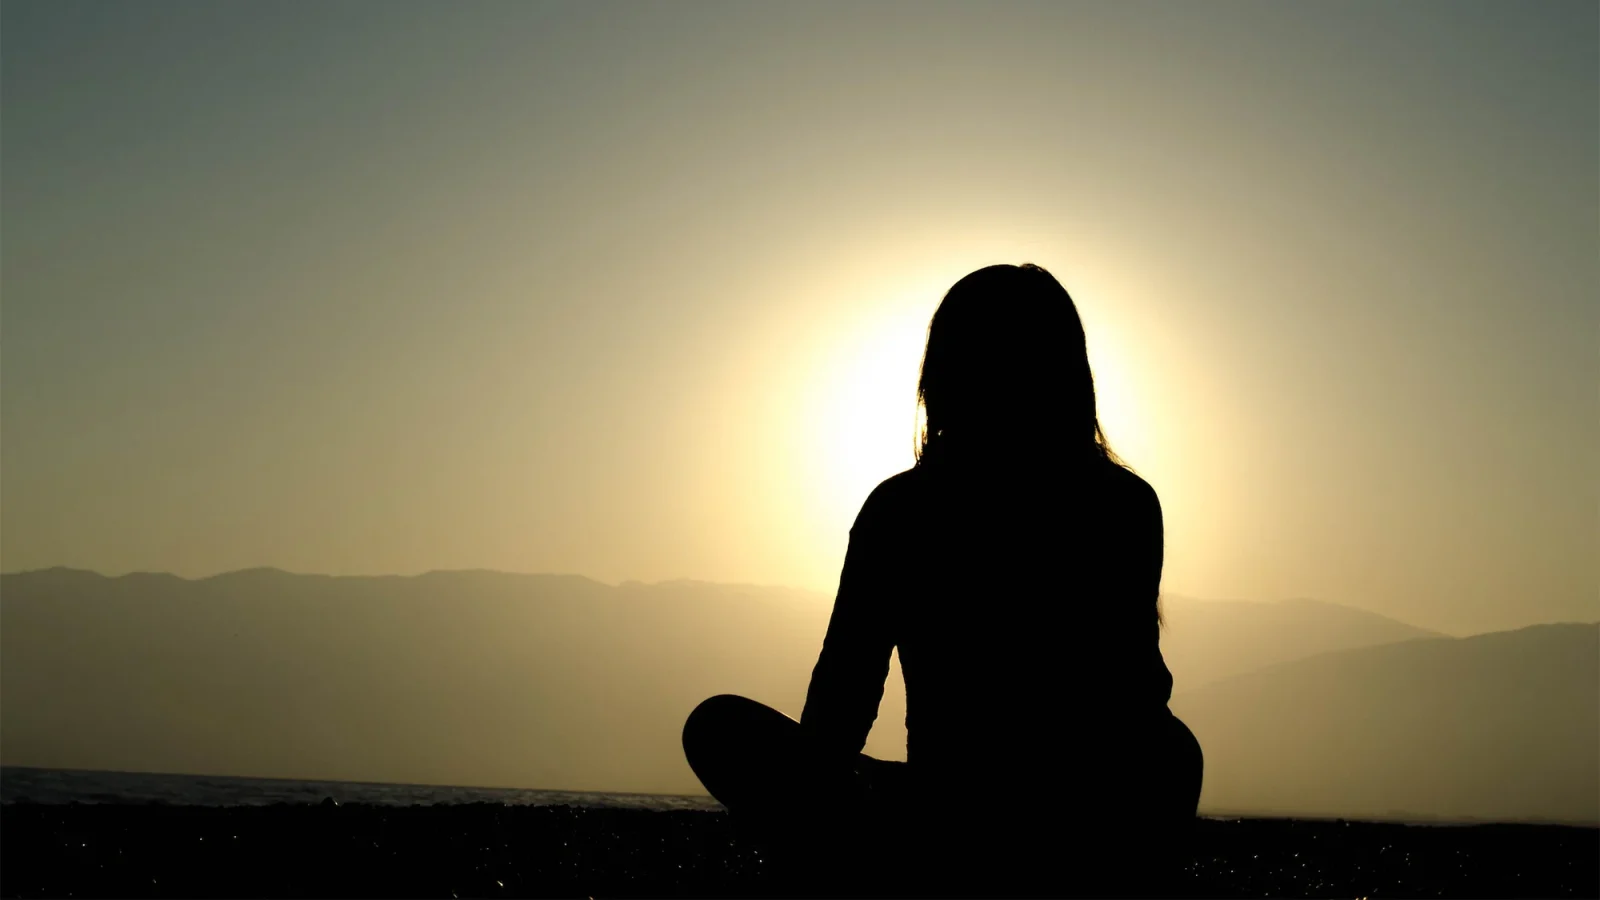 Woman sits cross-legged in shadow facing the sun on the horizon